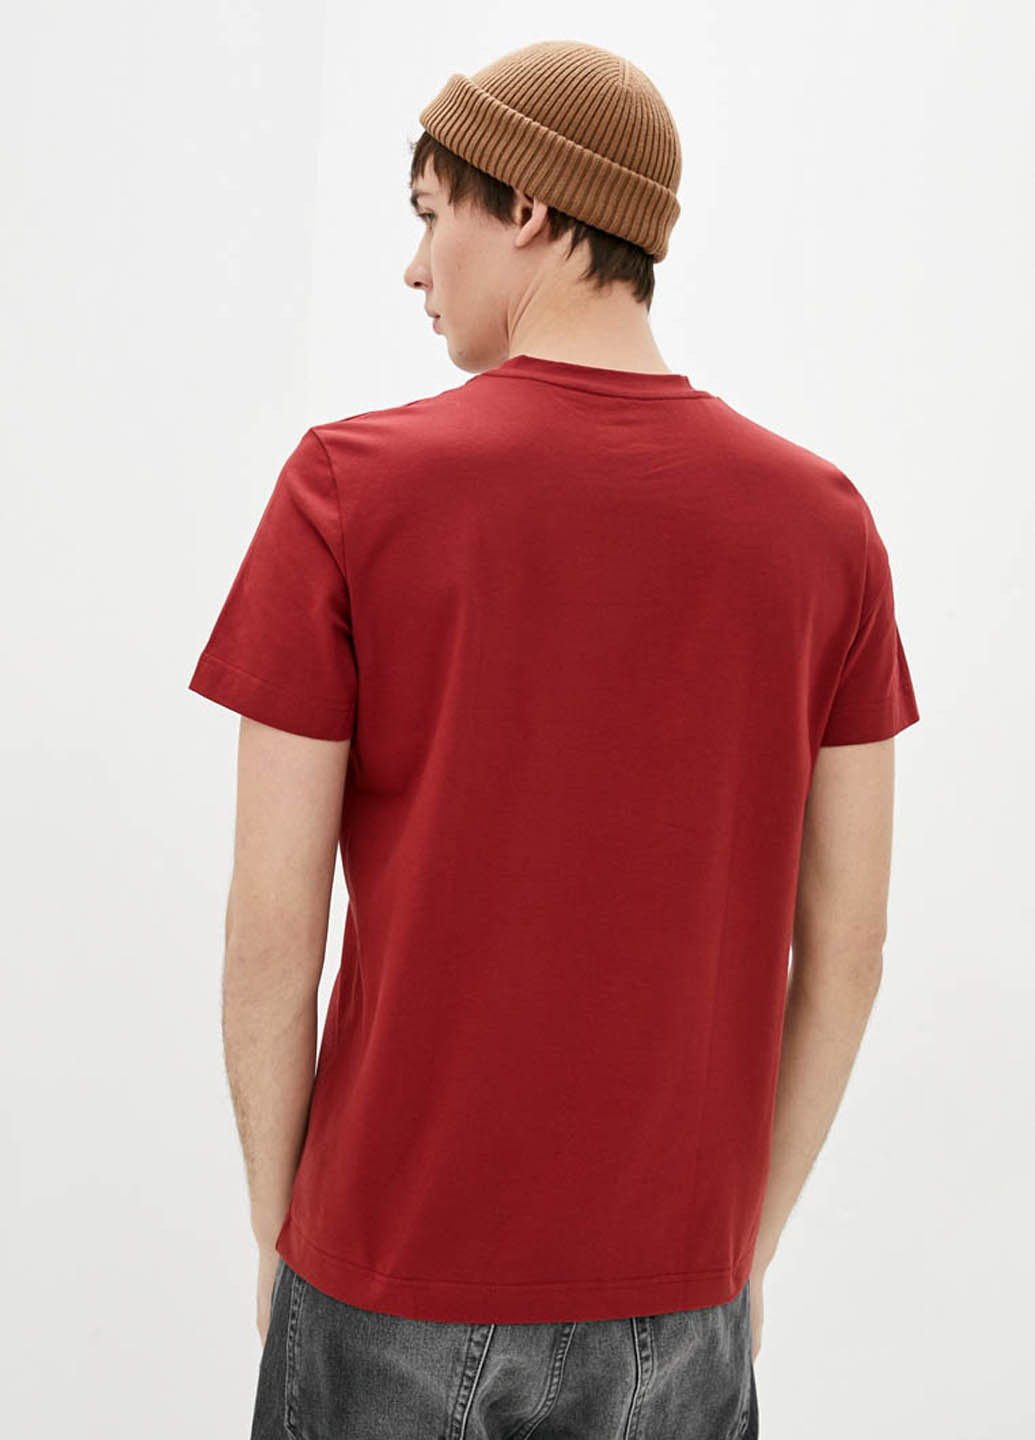 Бордовая футболка Promin.